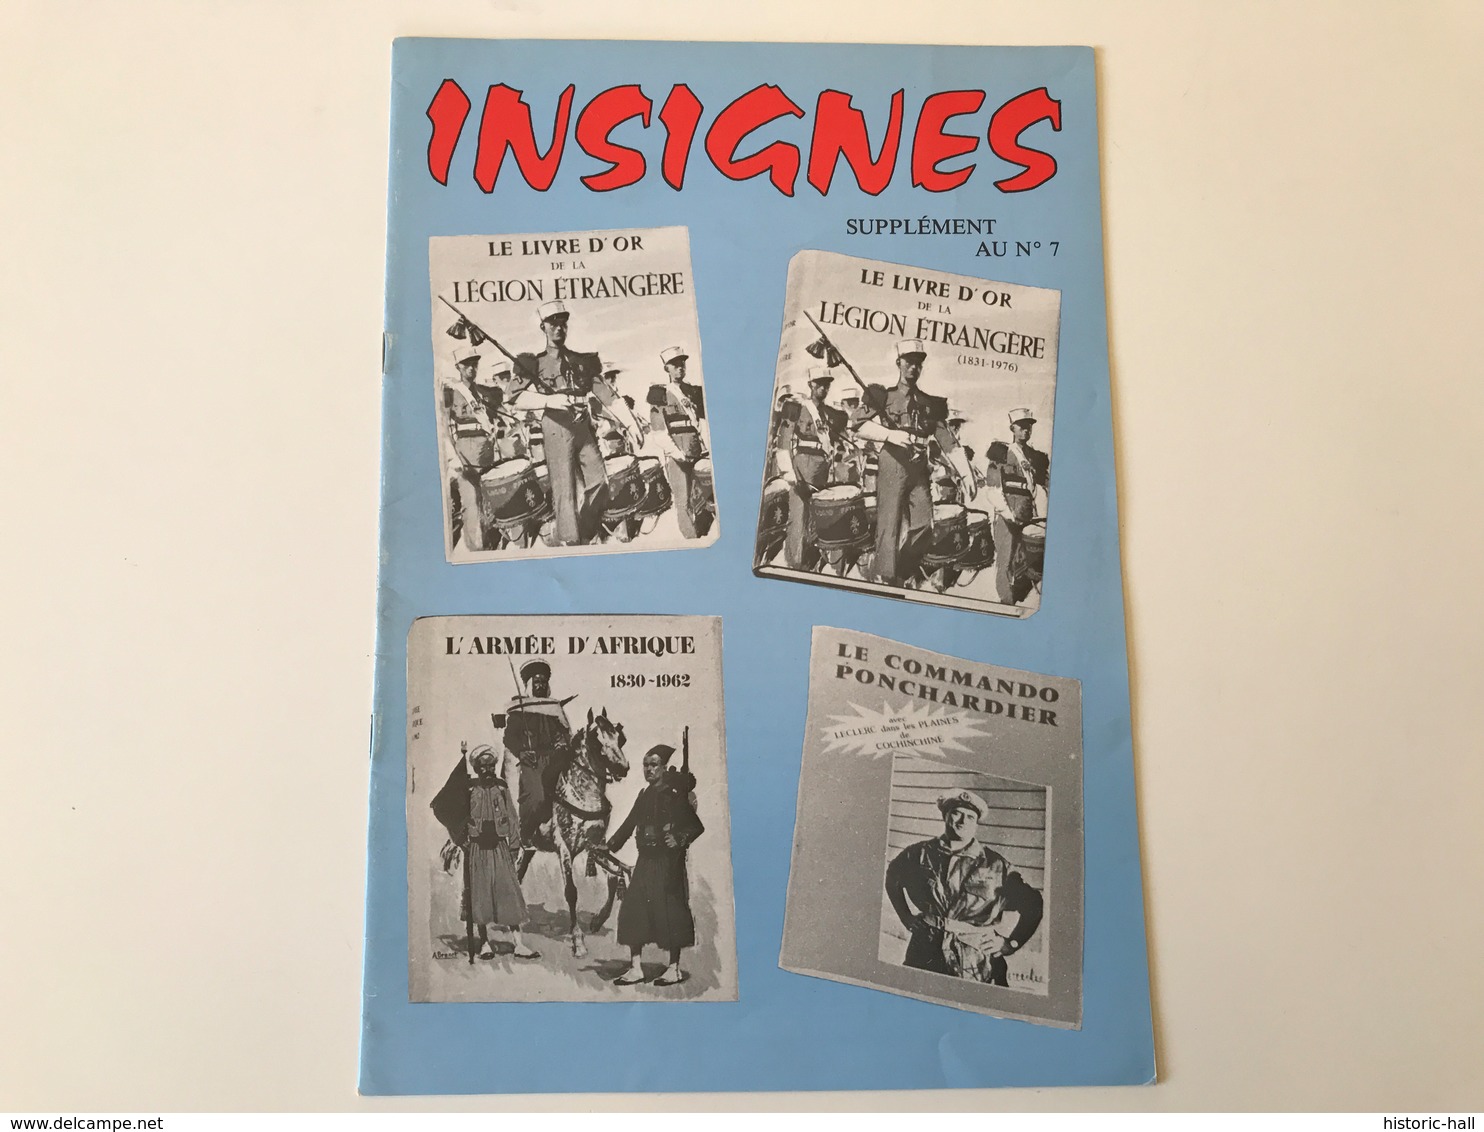 Catalogue INSIGNES n°7 & supplement - 1977